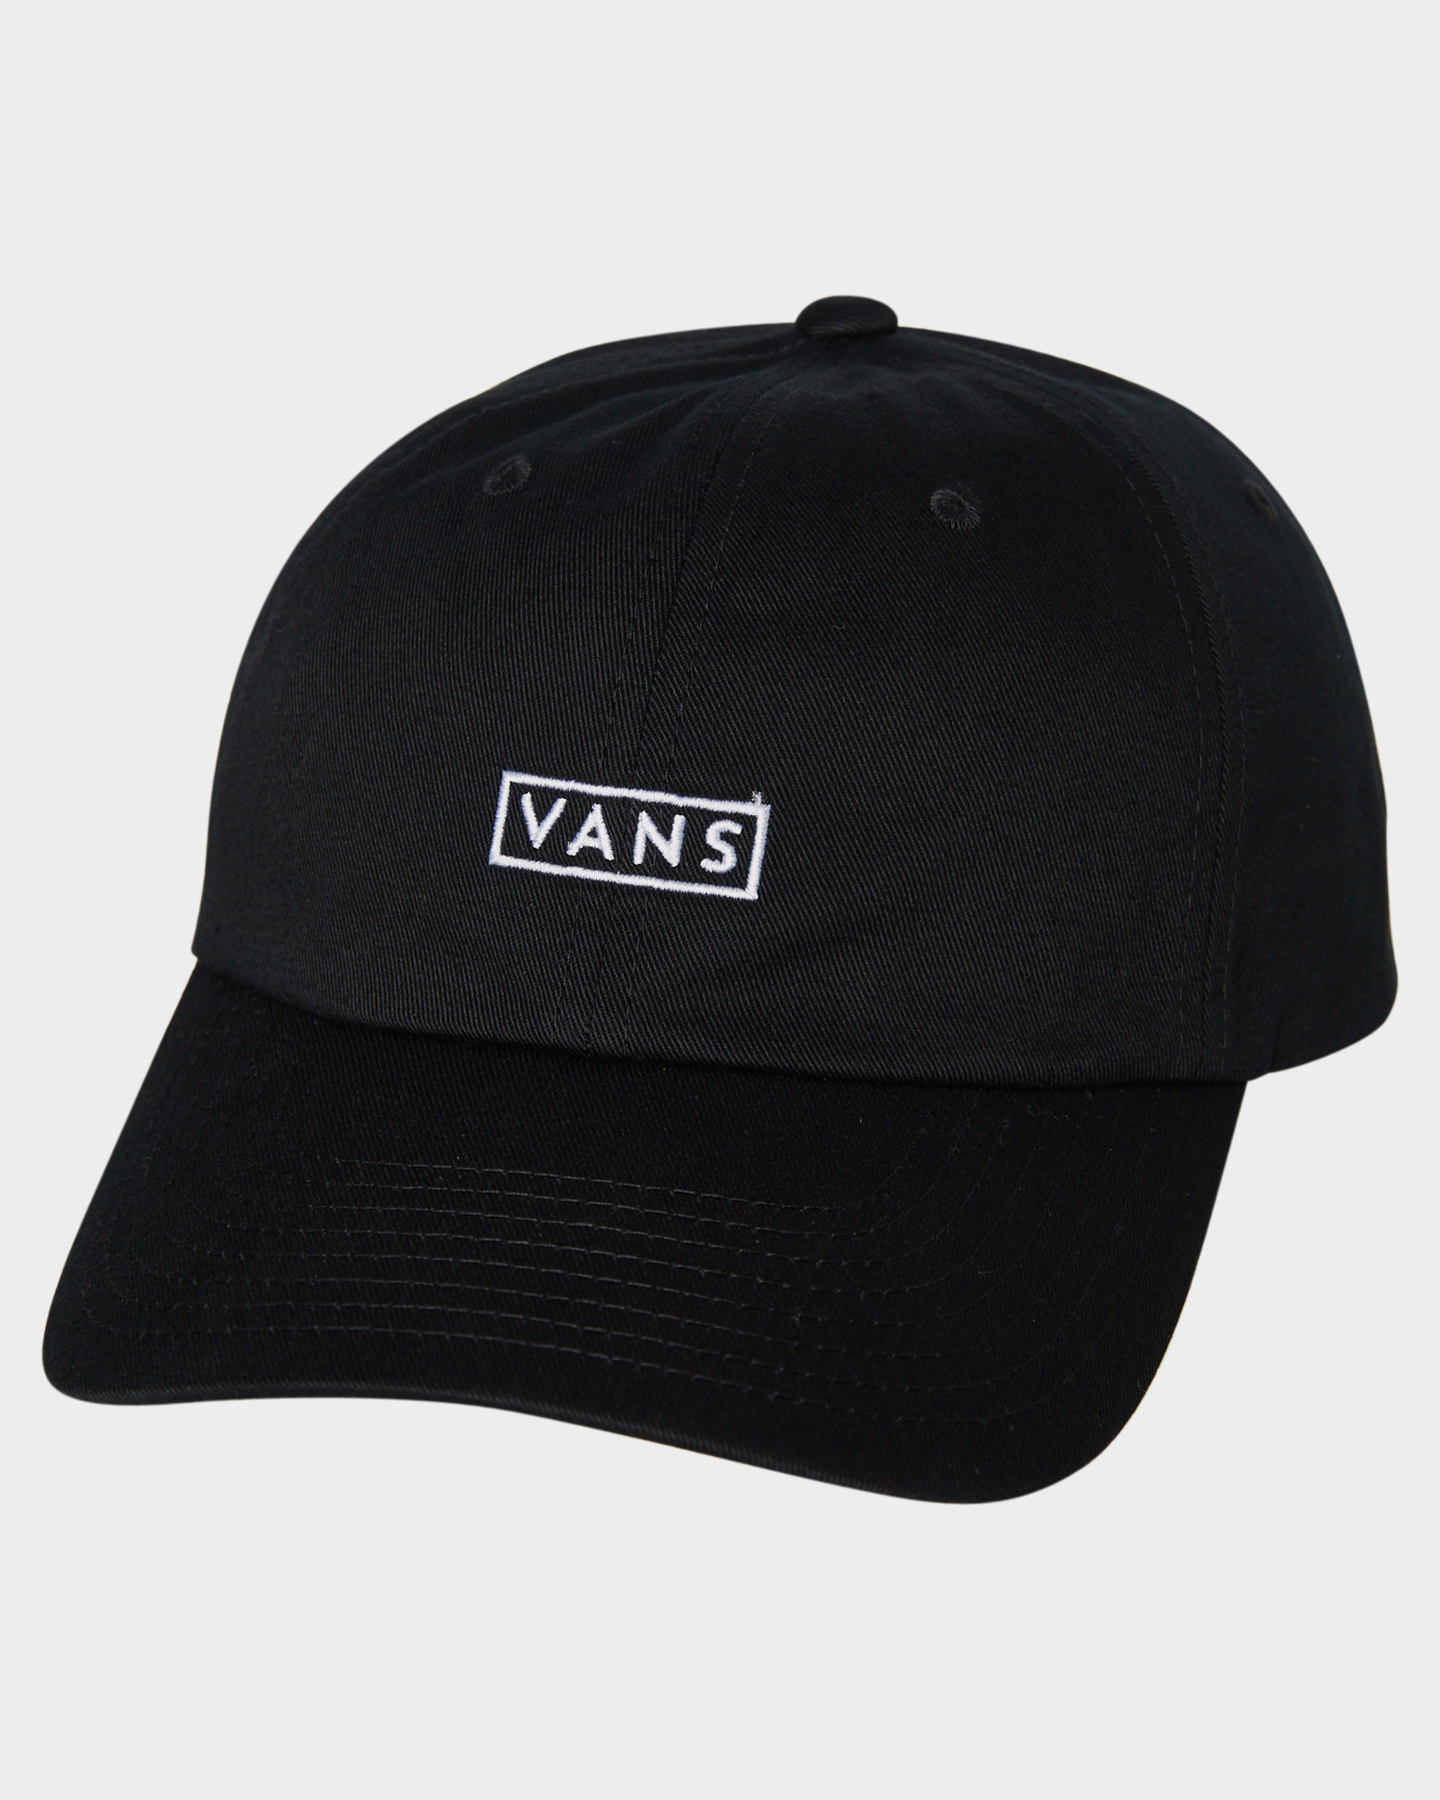 vans black cap